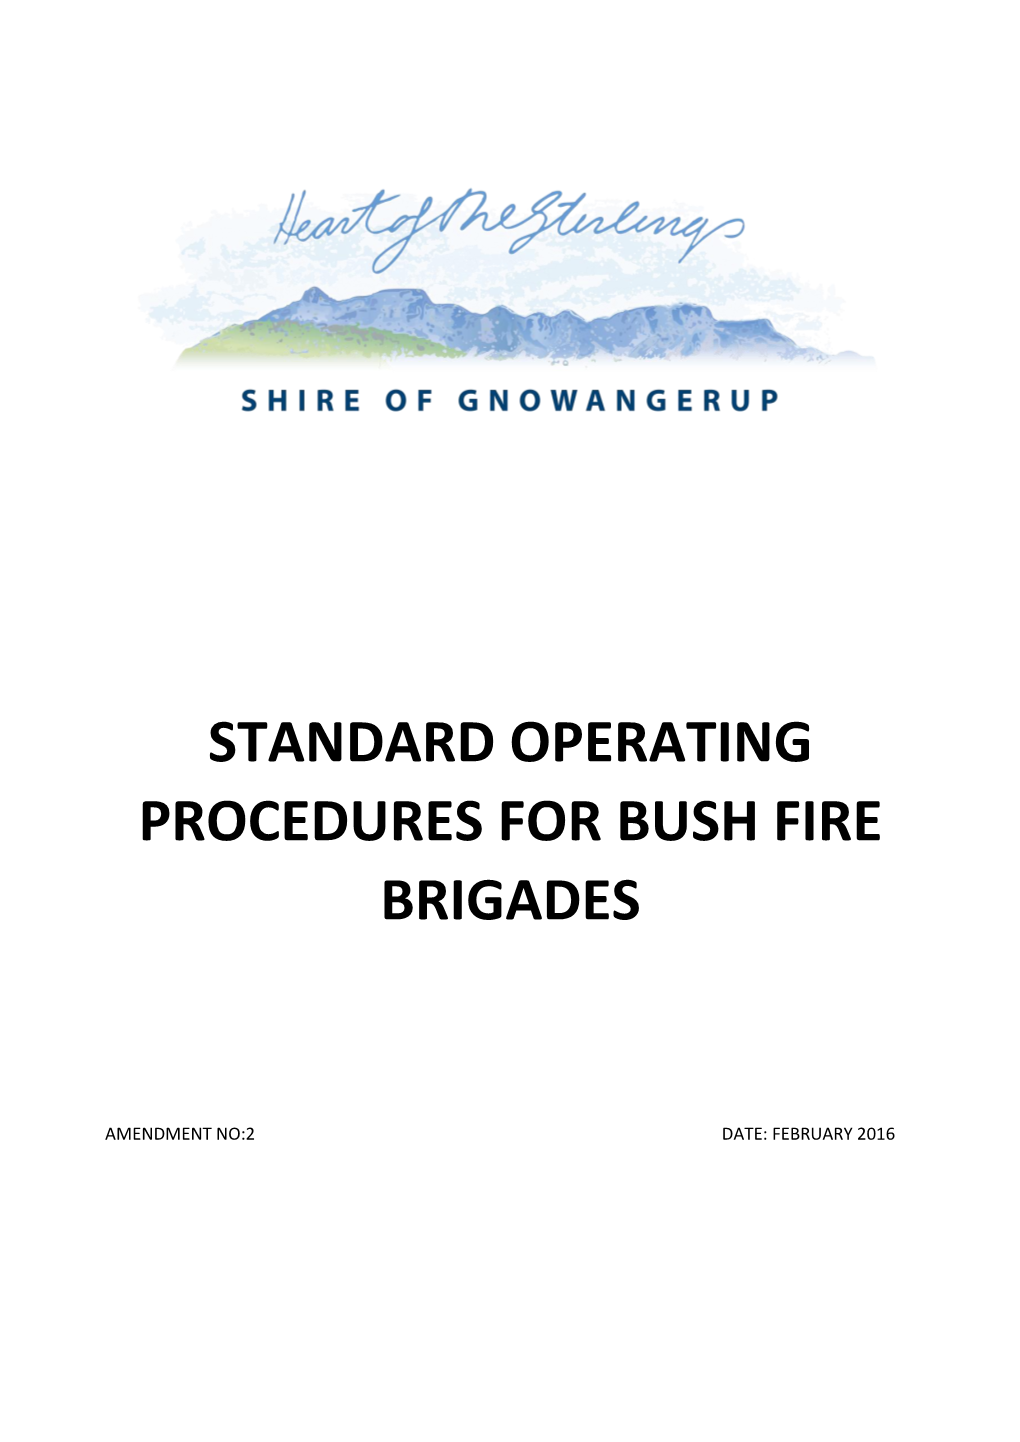 Standard Operating Procedures for Bush Fire Brigades